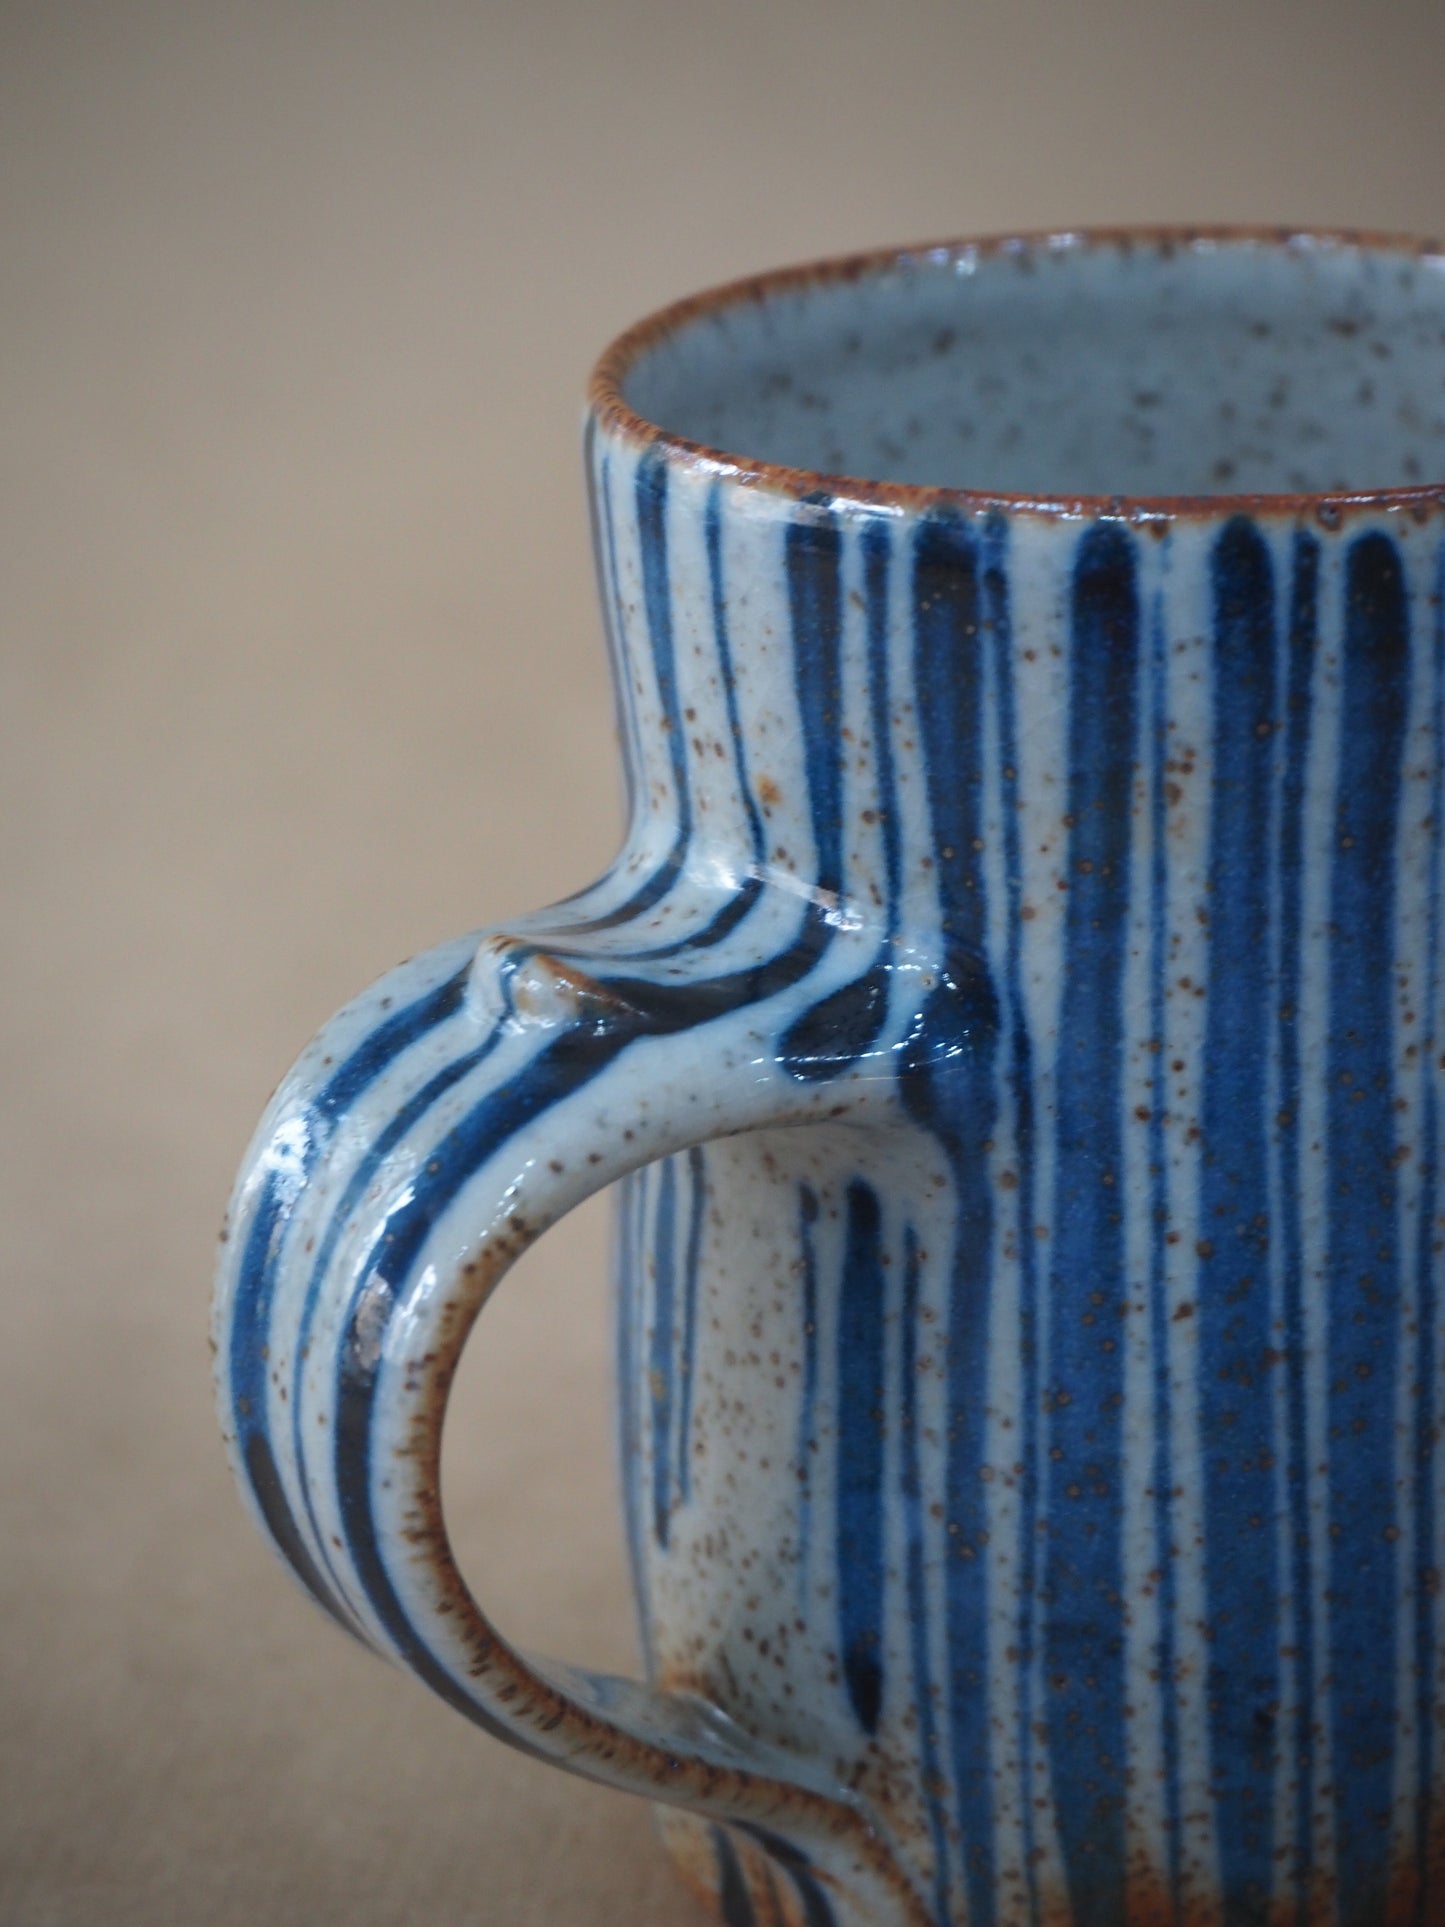 Goldsmith, Robert – Small Blue Pinstripe Mug